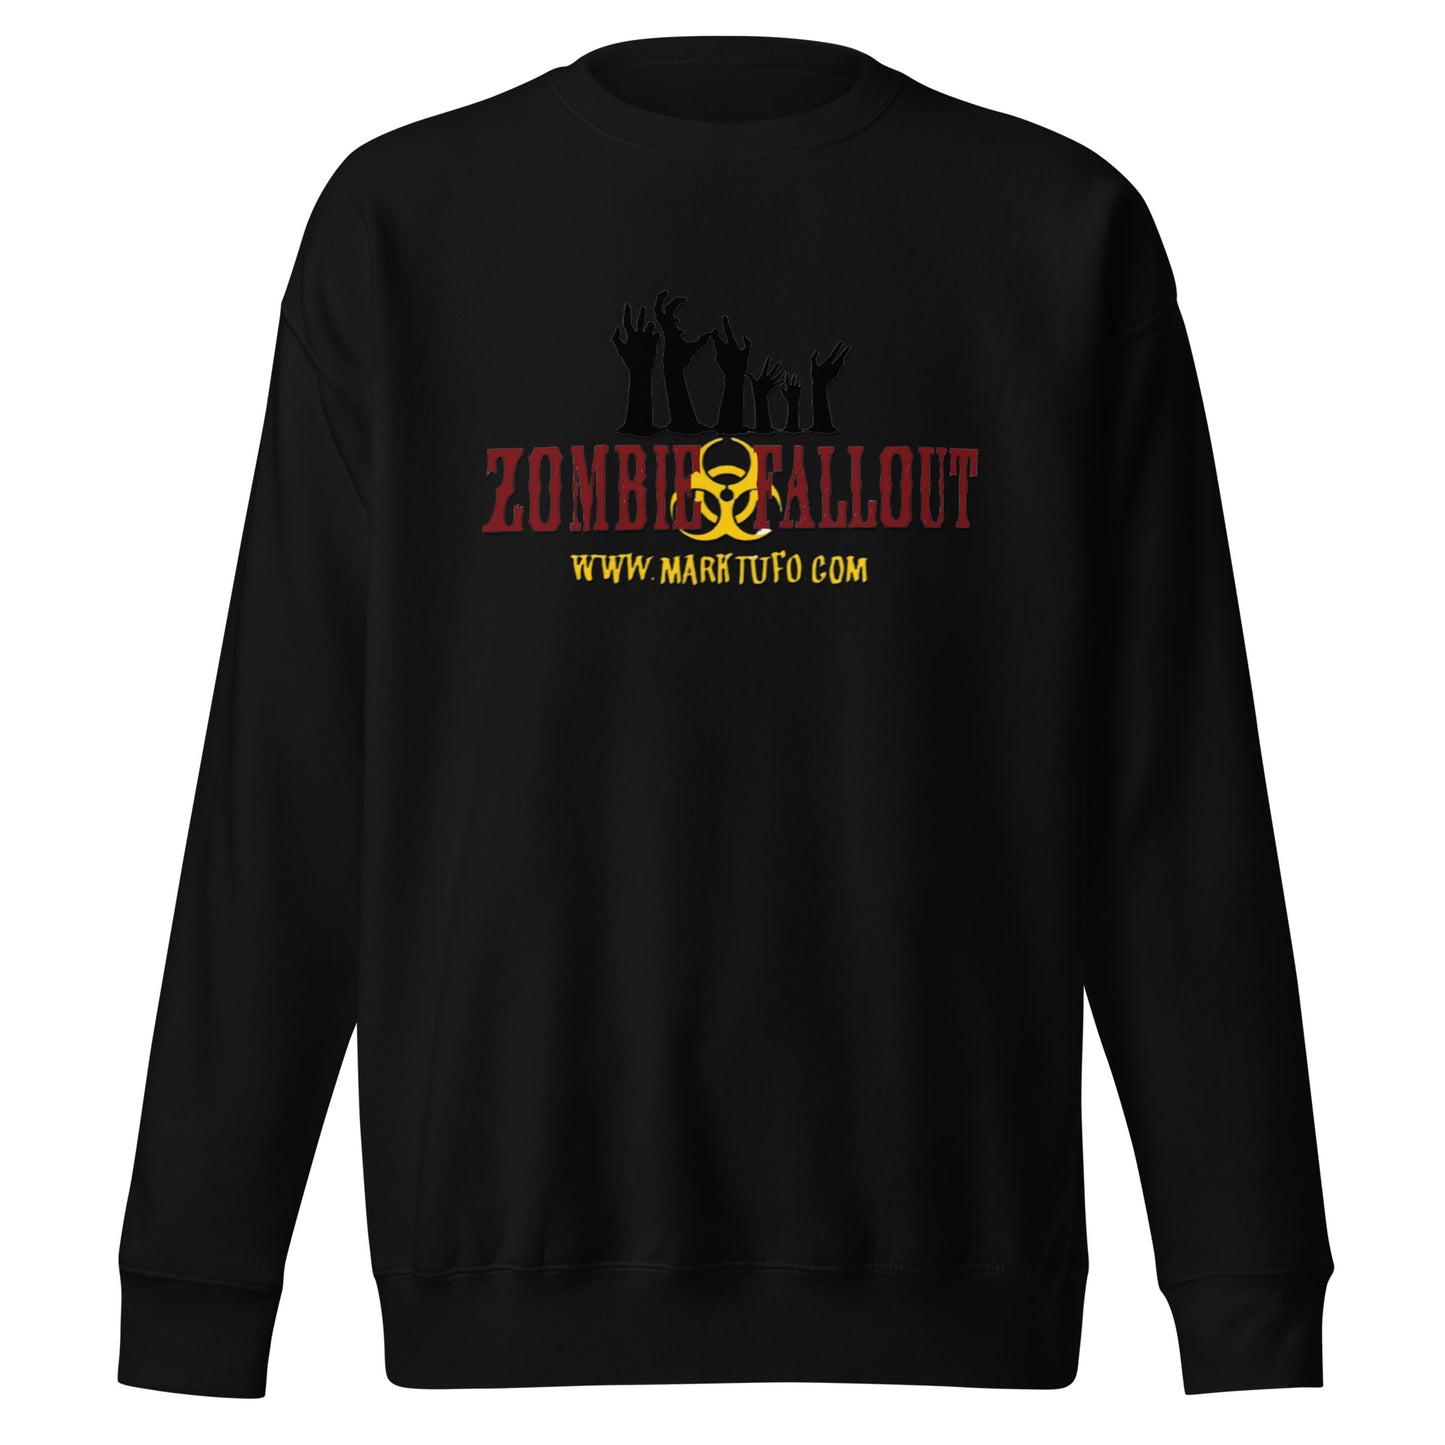 Zombie Fallout Sweatshirt